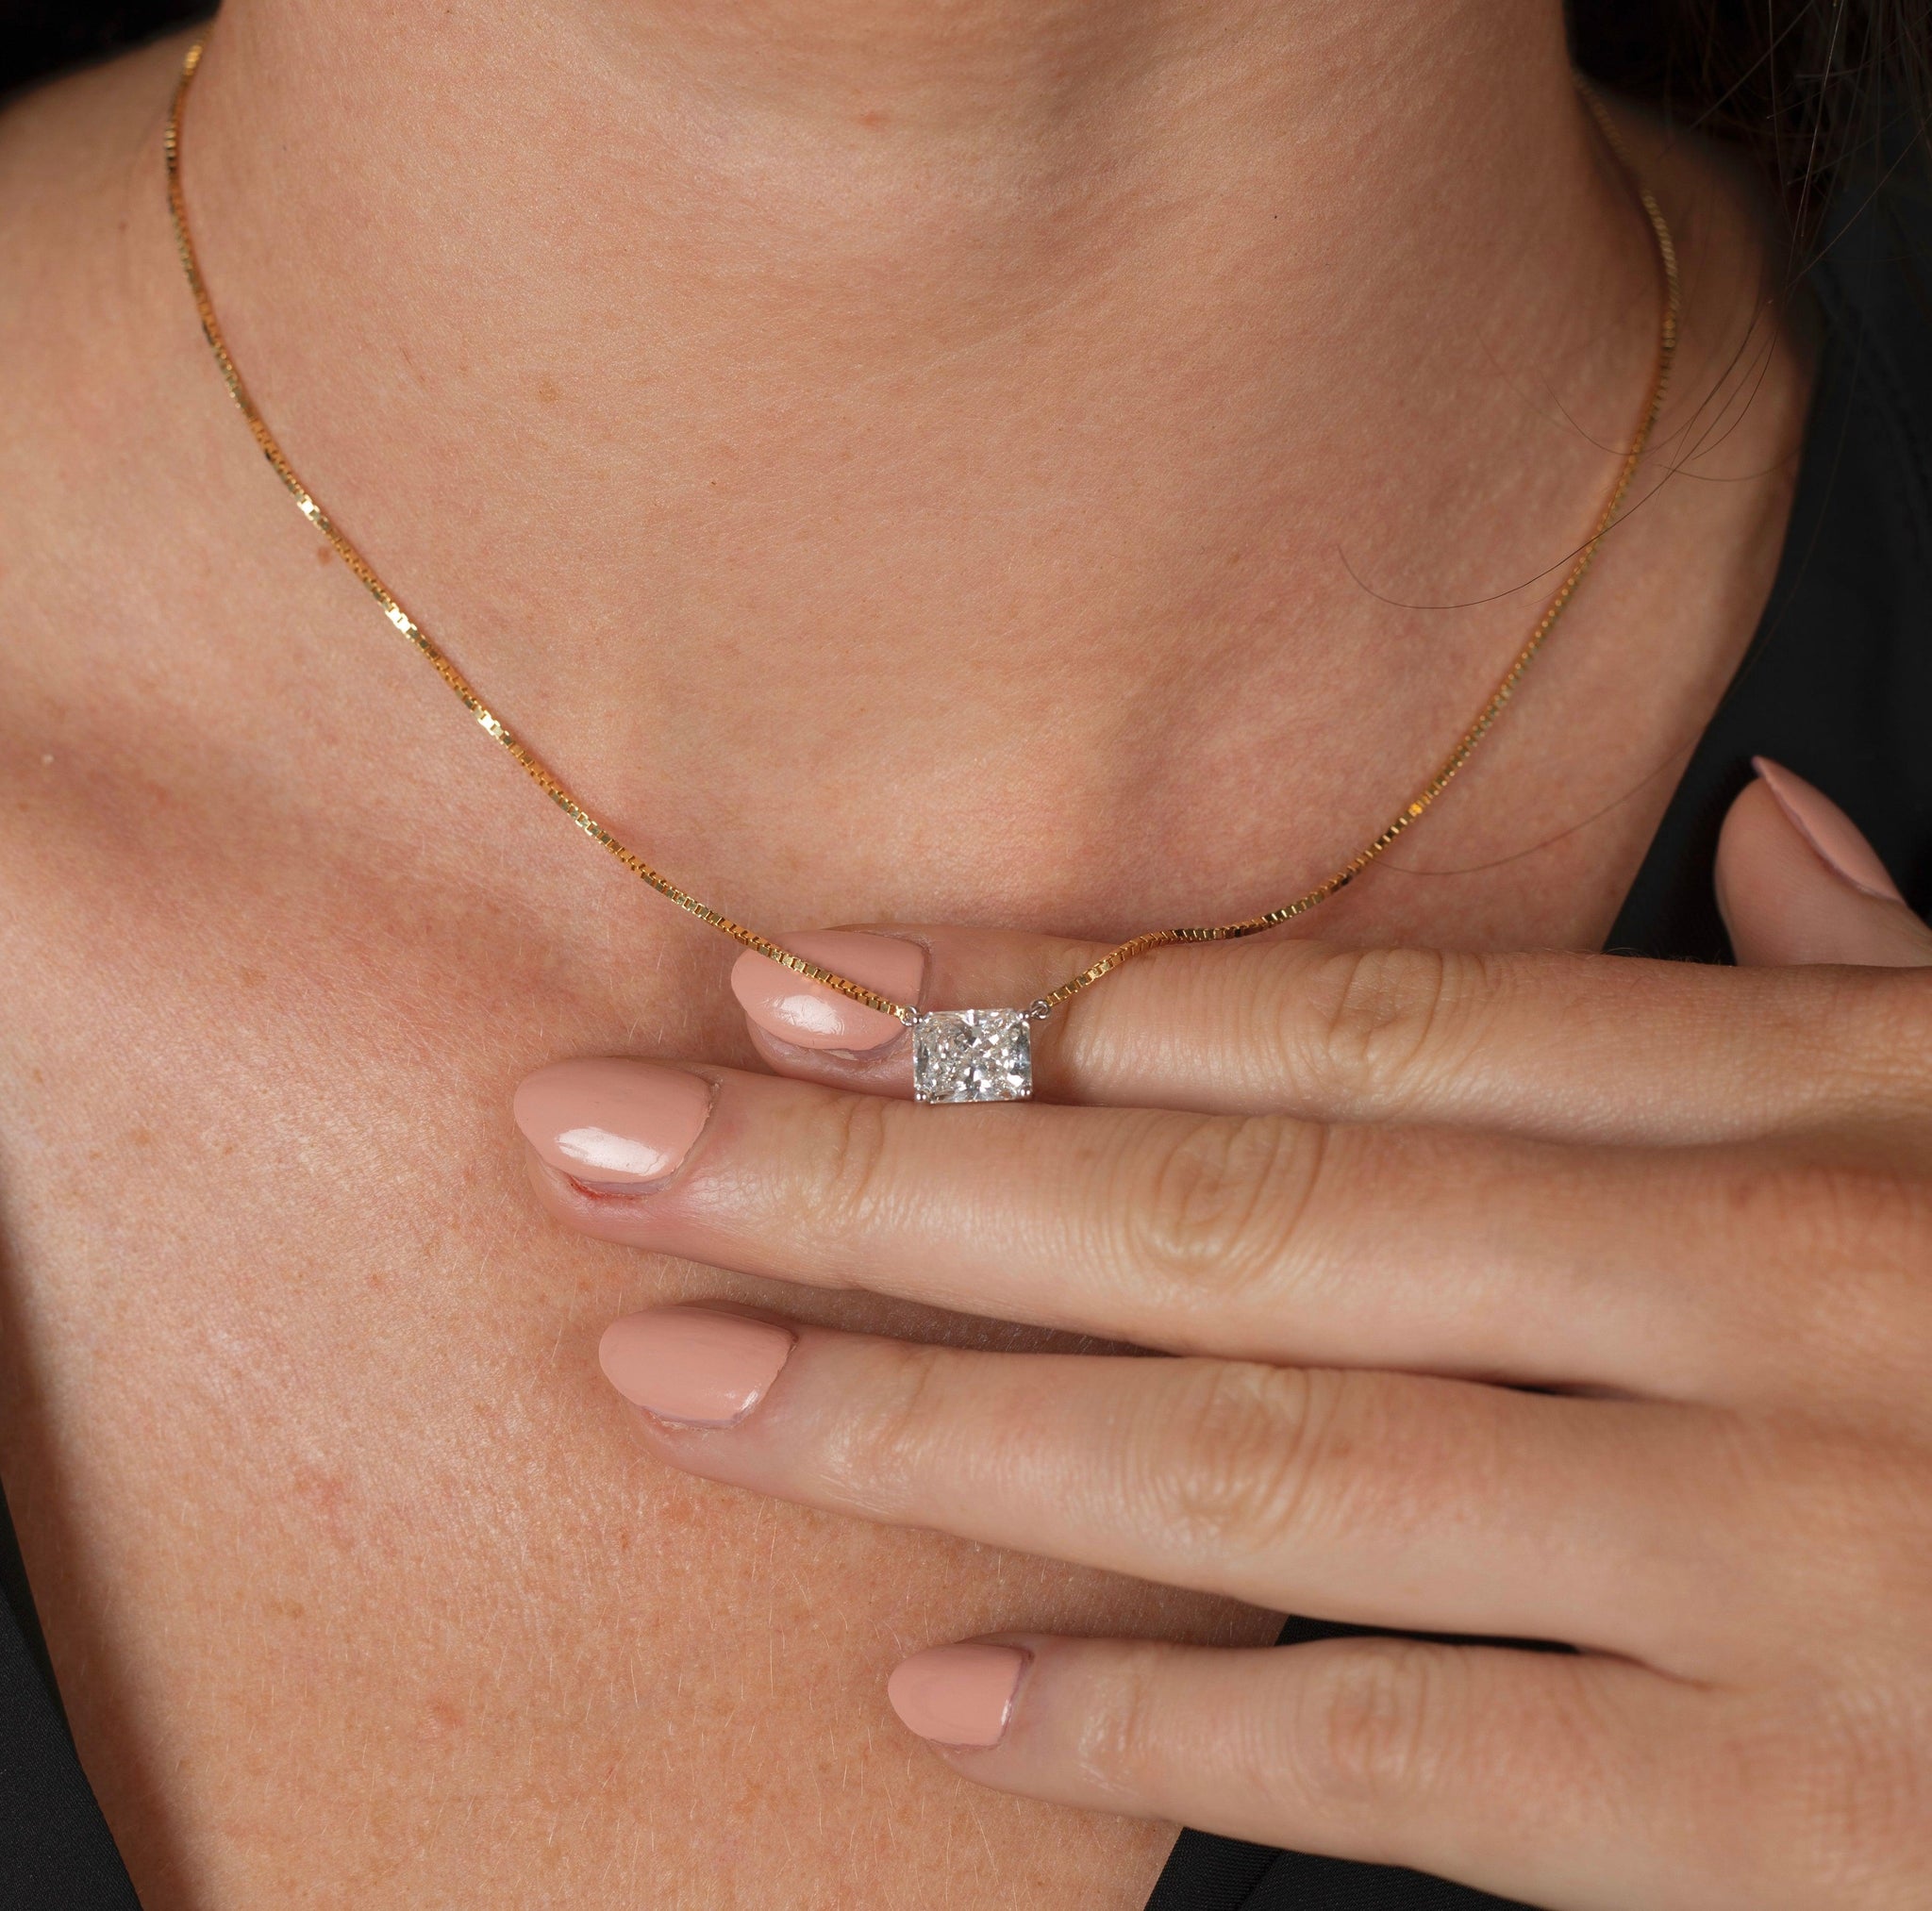 18k Real Diamond Necklace Set JGS-2103-00396 – Jewelegance